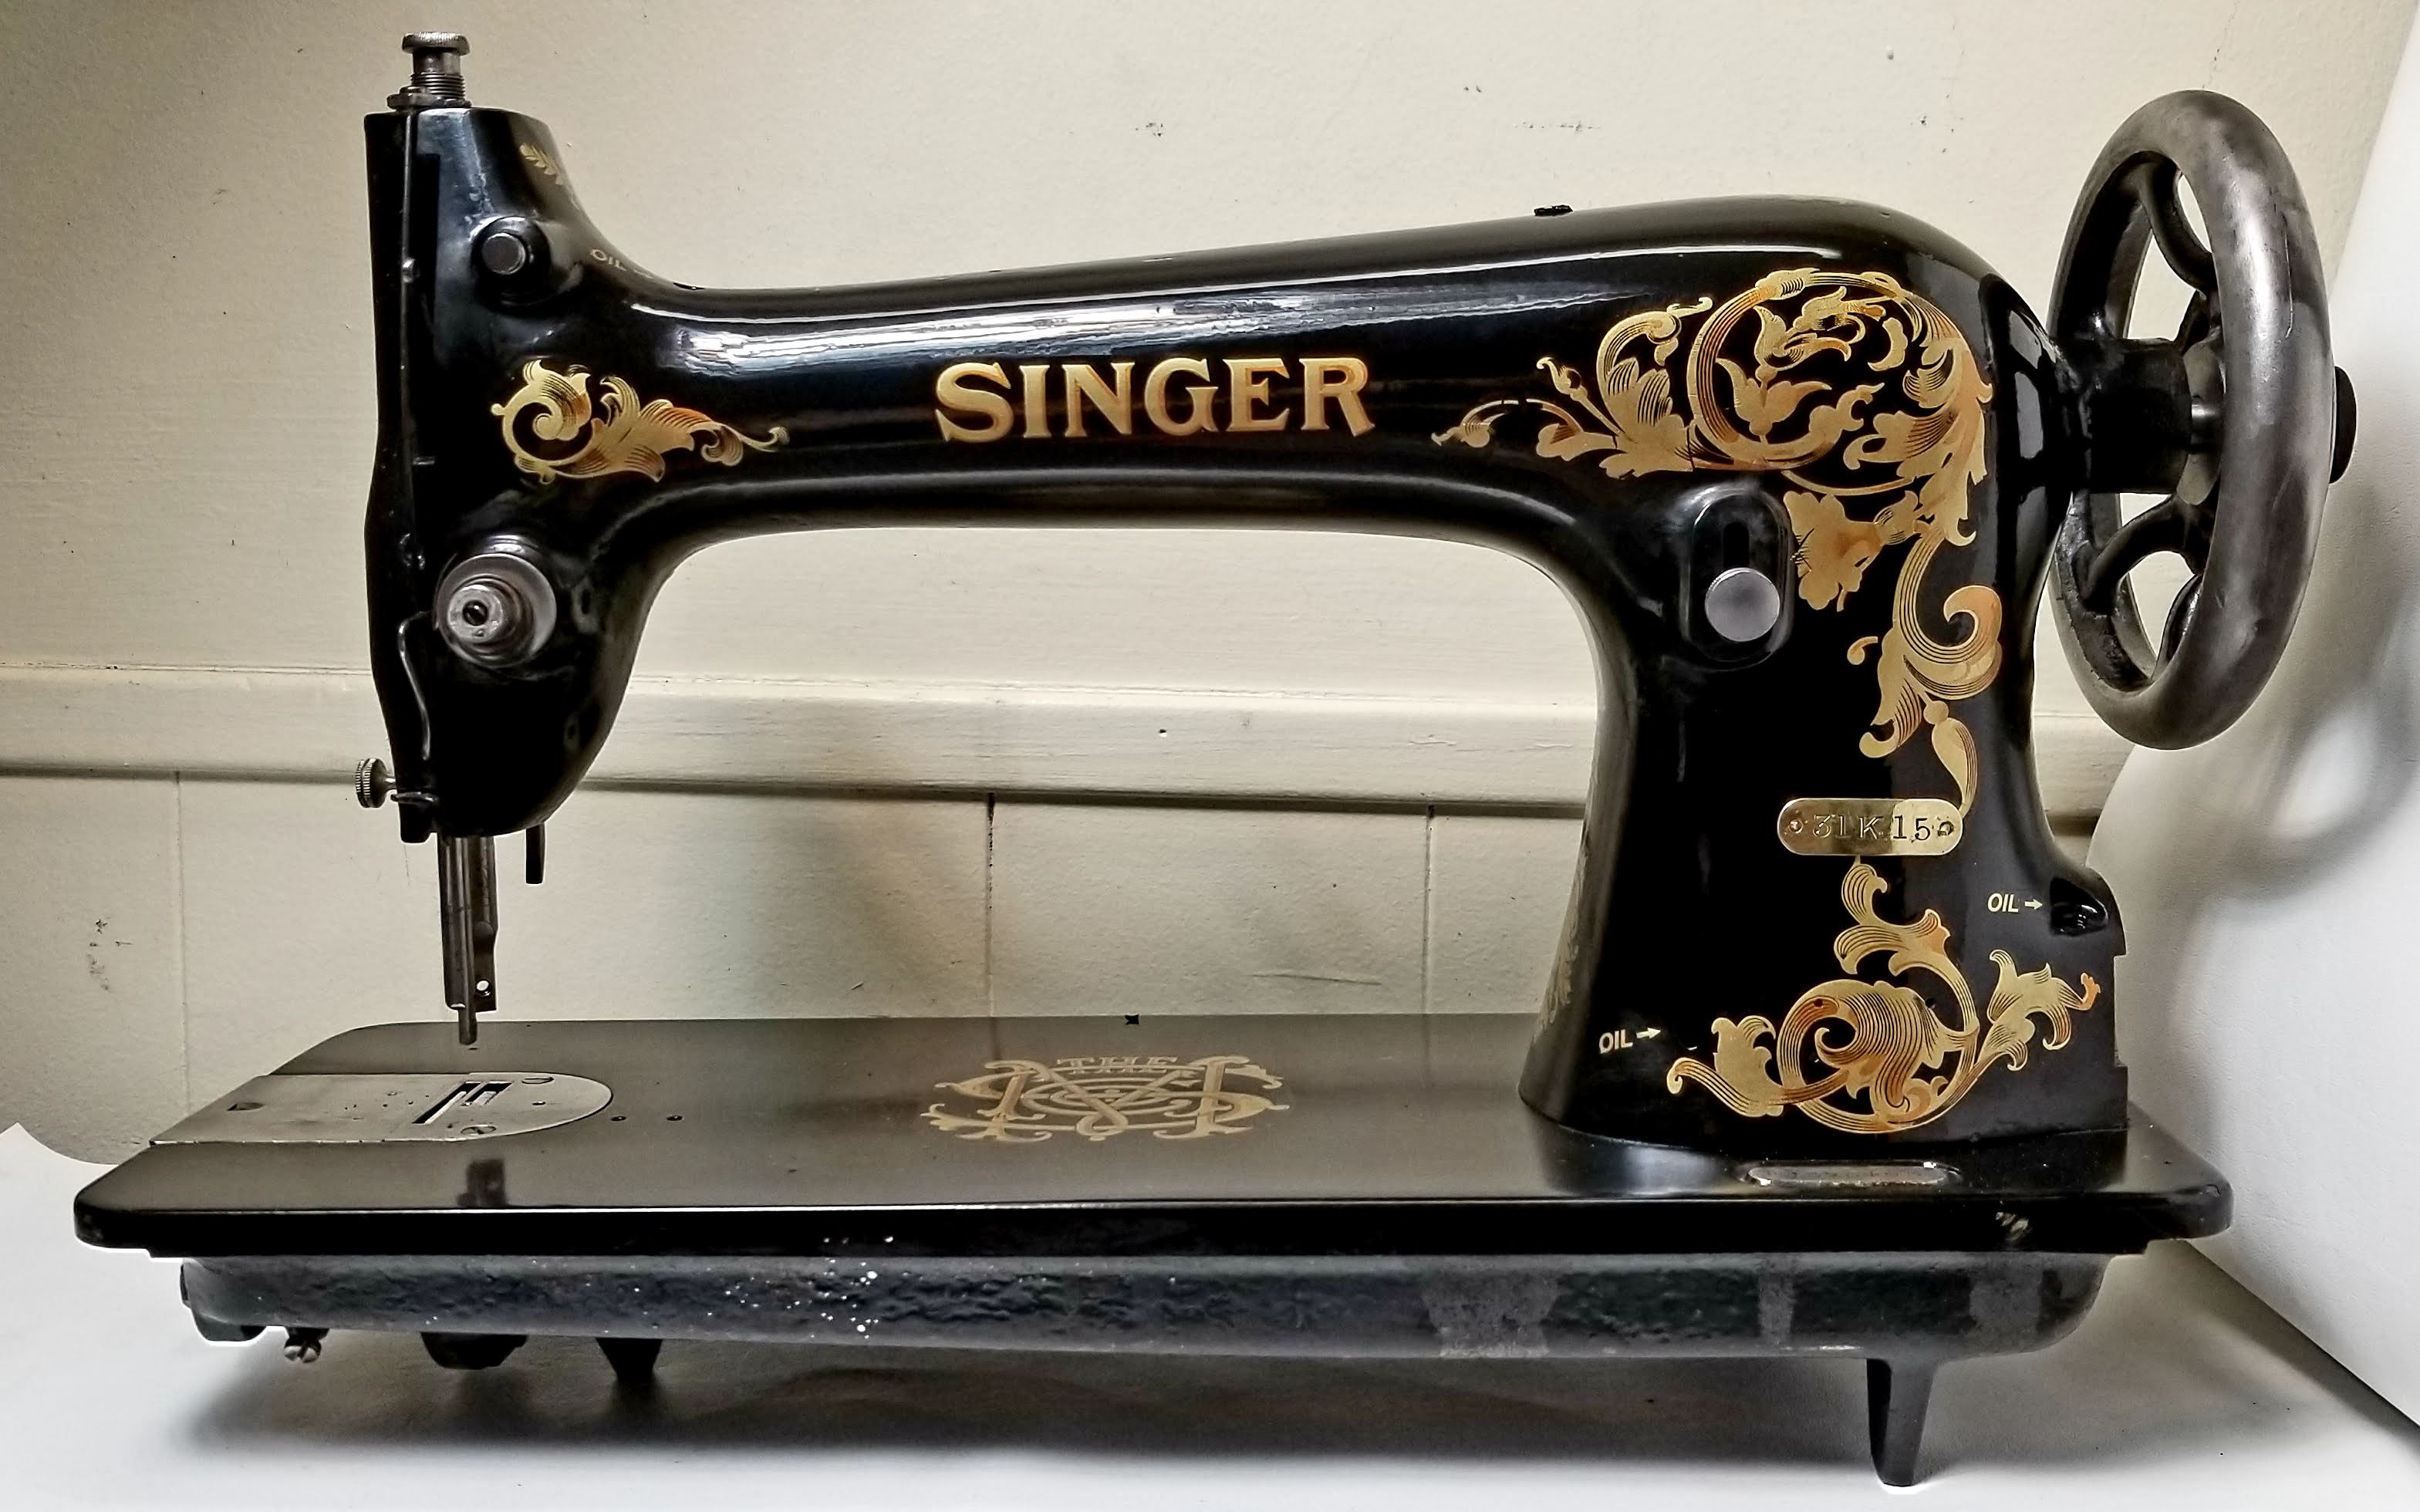 Singer's. Singer 31k15. Швейная машинка Зингер 31к15. Зингер Симанко. Швейная машинка Зингер 31.